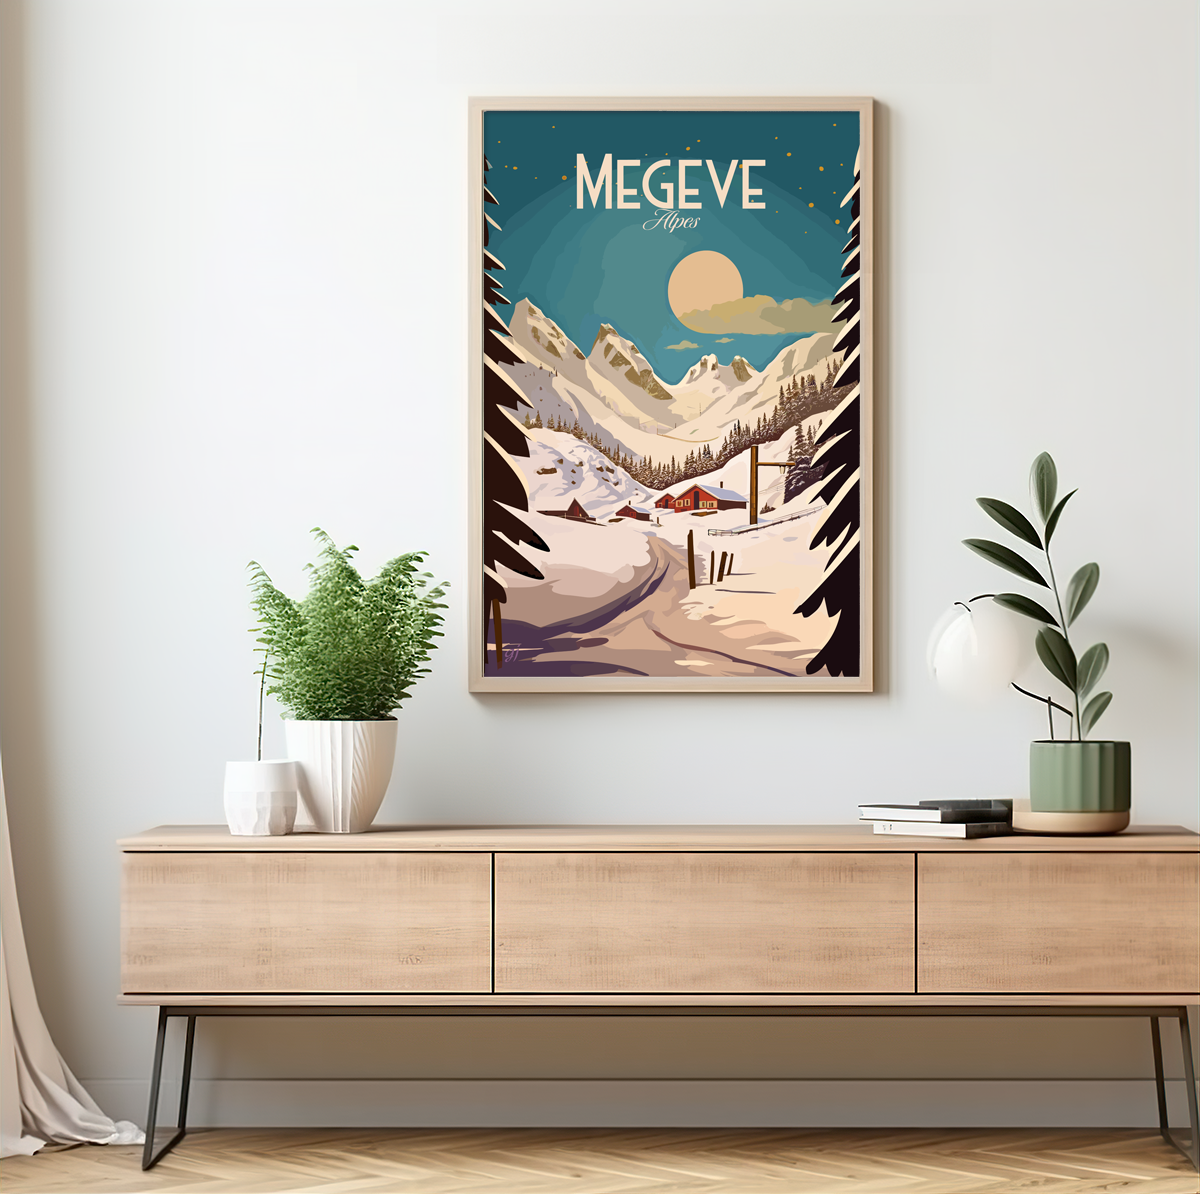 Megeve poster by bon voyage design